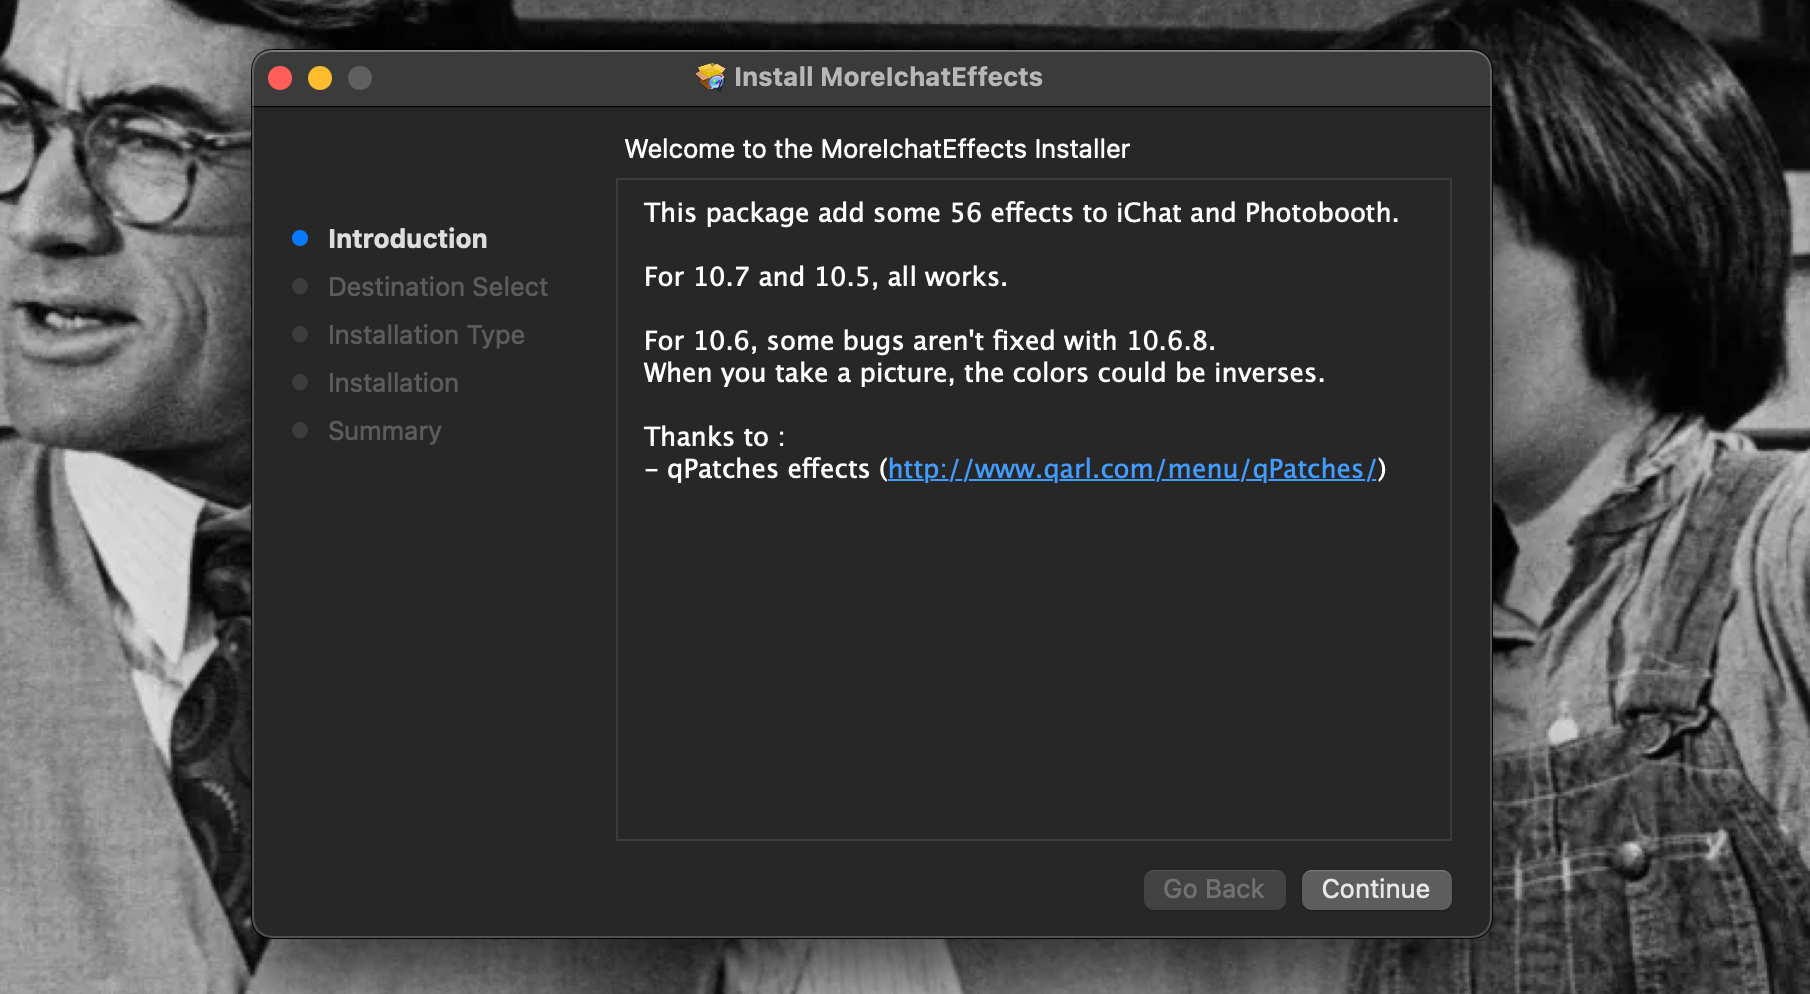 MoreIchatEffects installer open on Mac